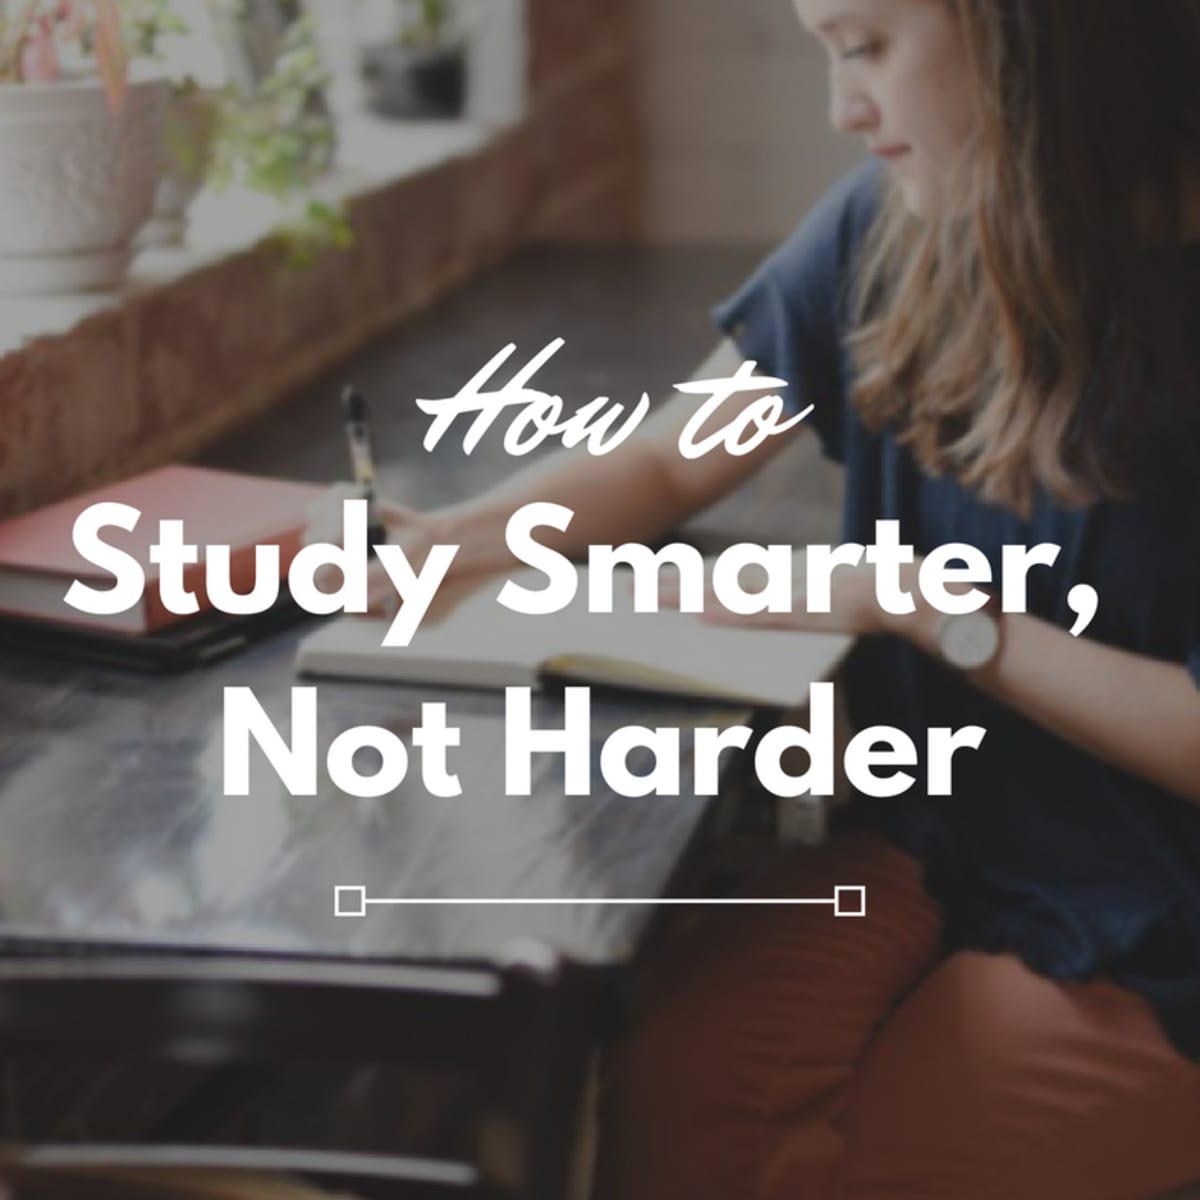 Study Smarter Not Harder